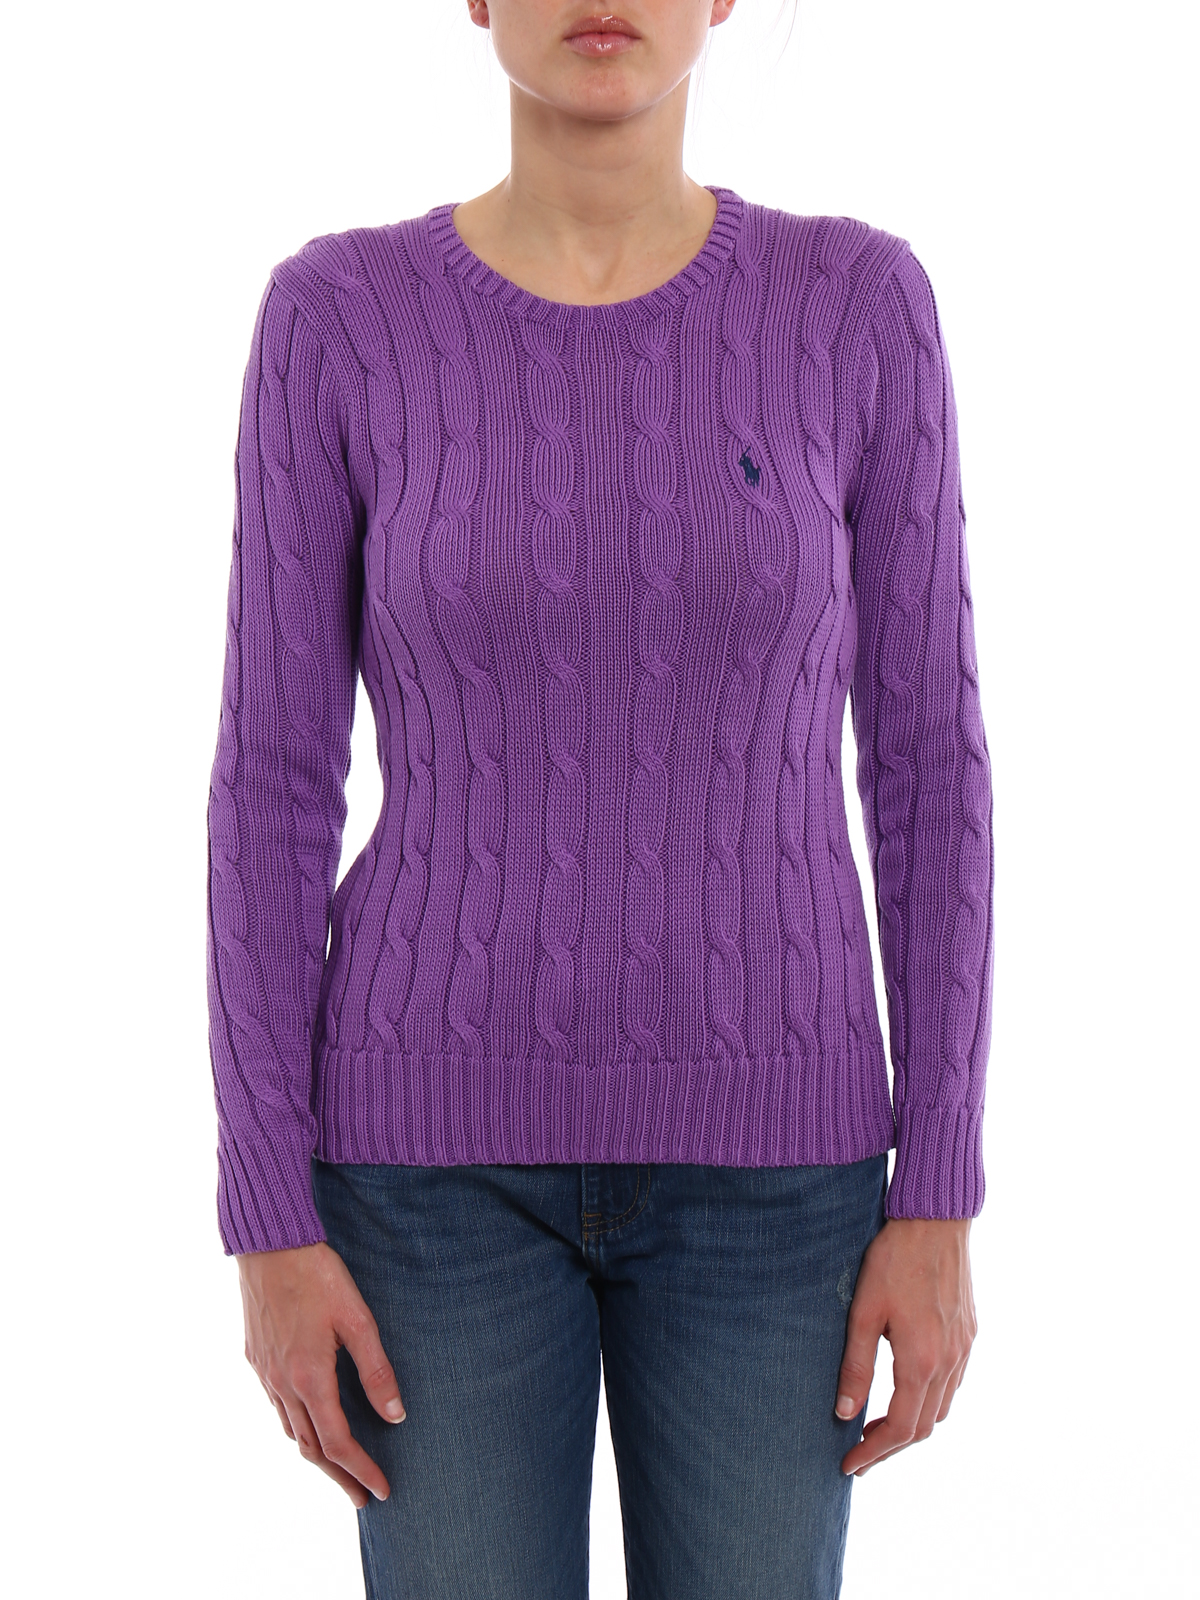 polo purple sweater